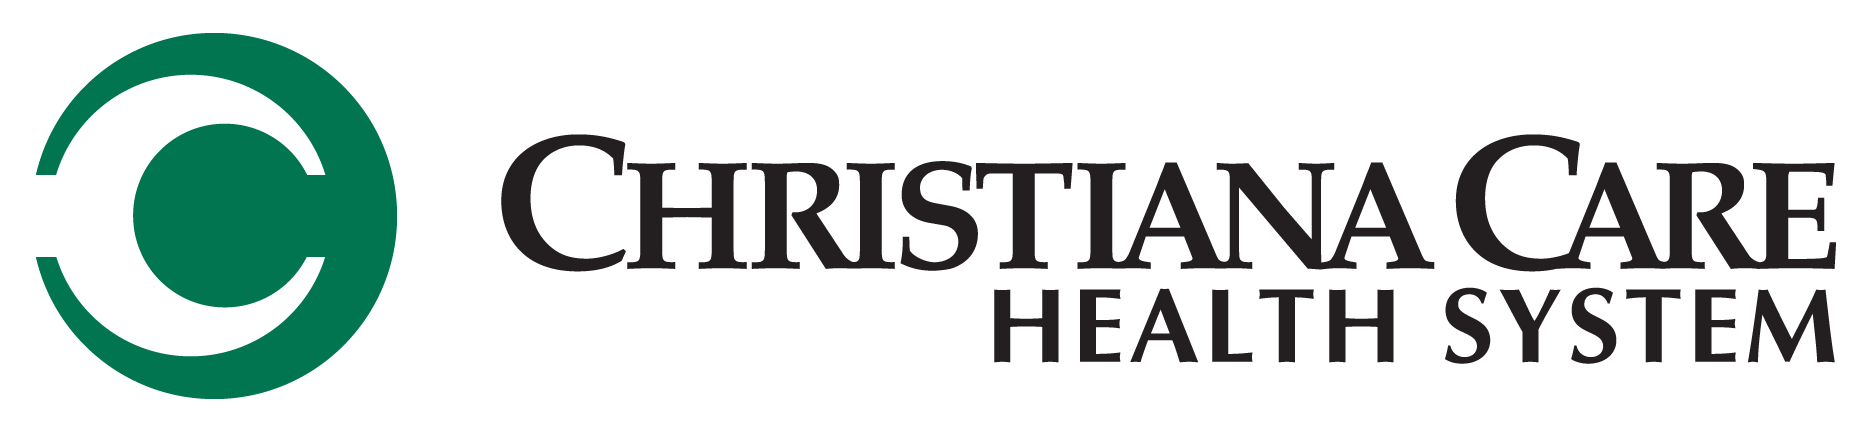 Image result for christiana care health system logo